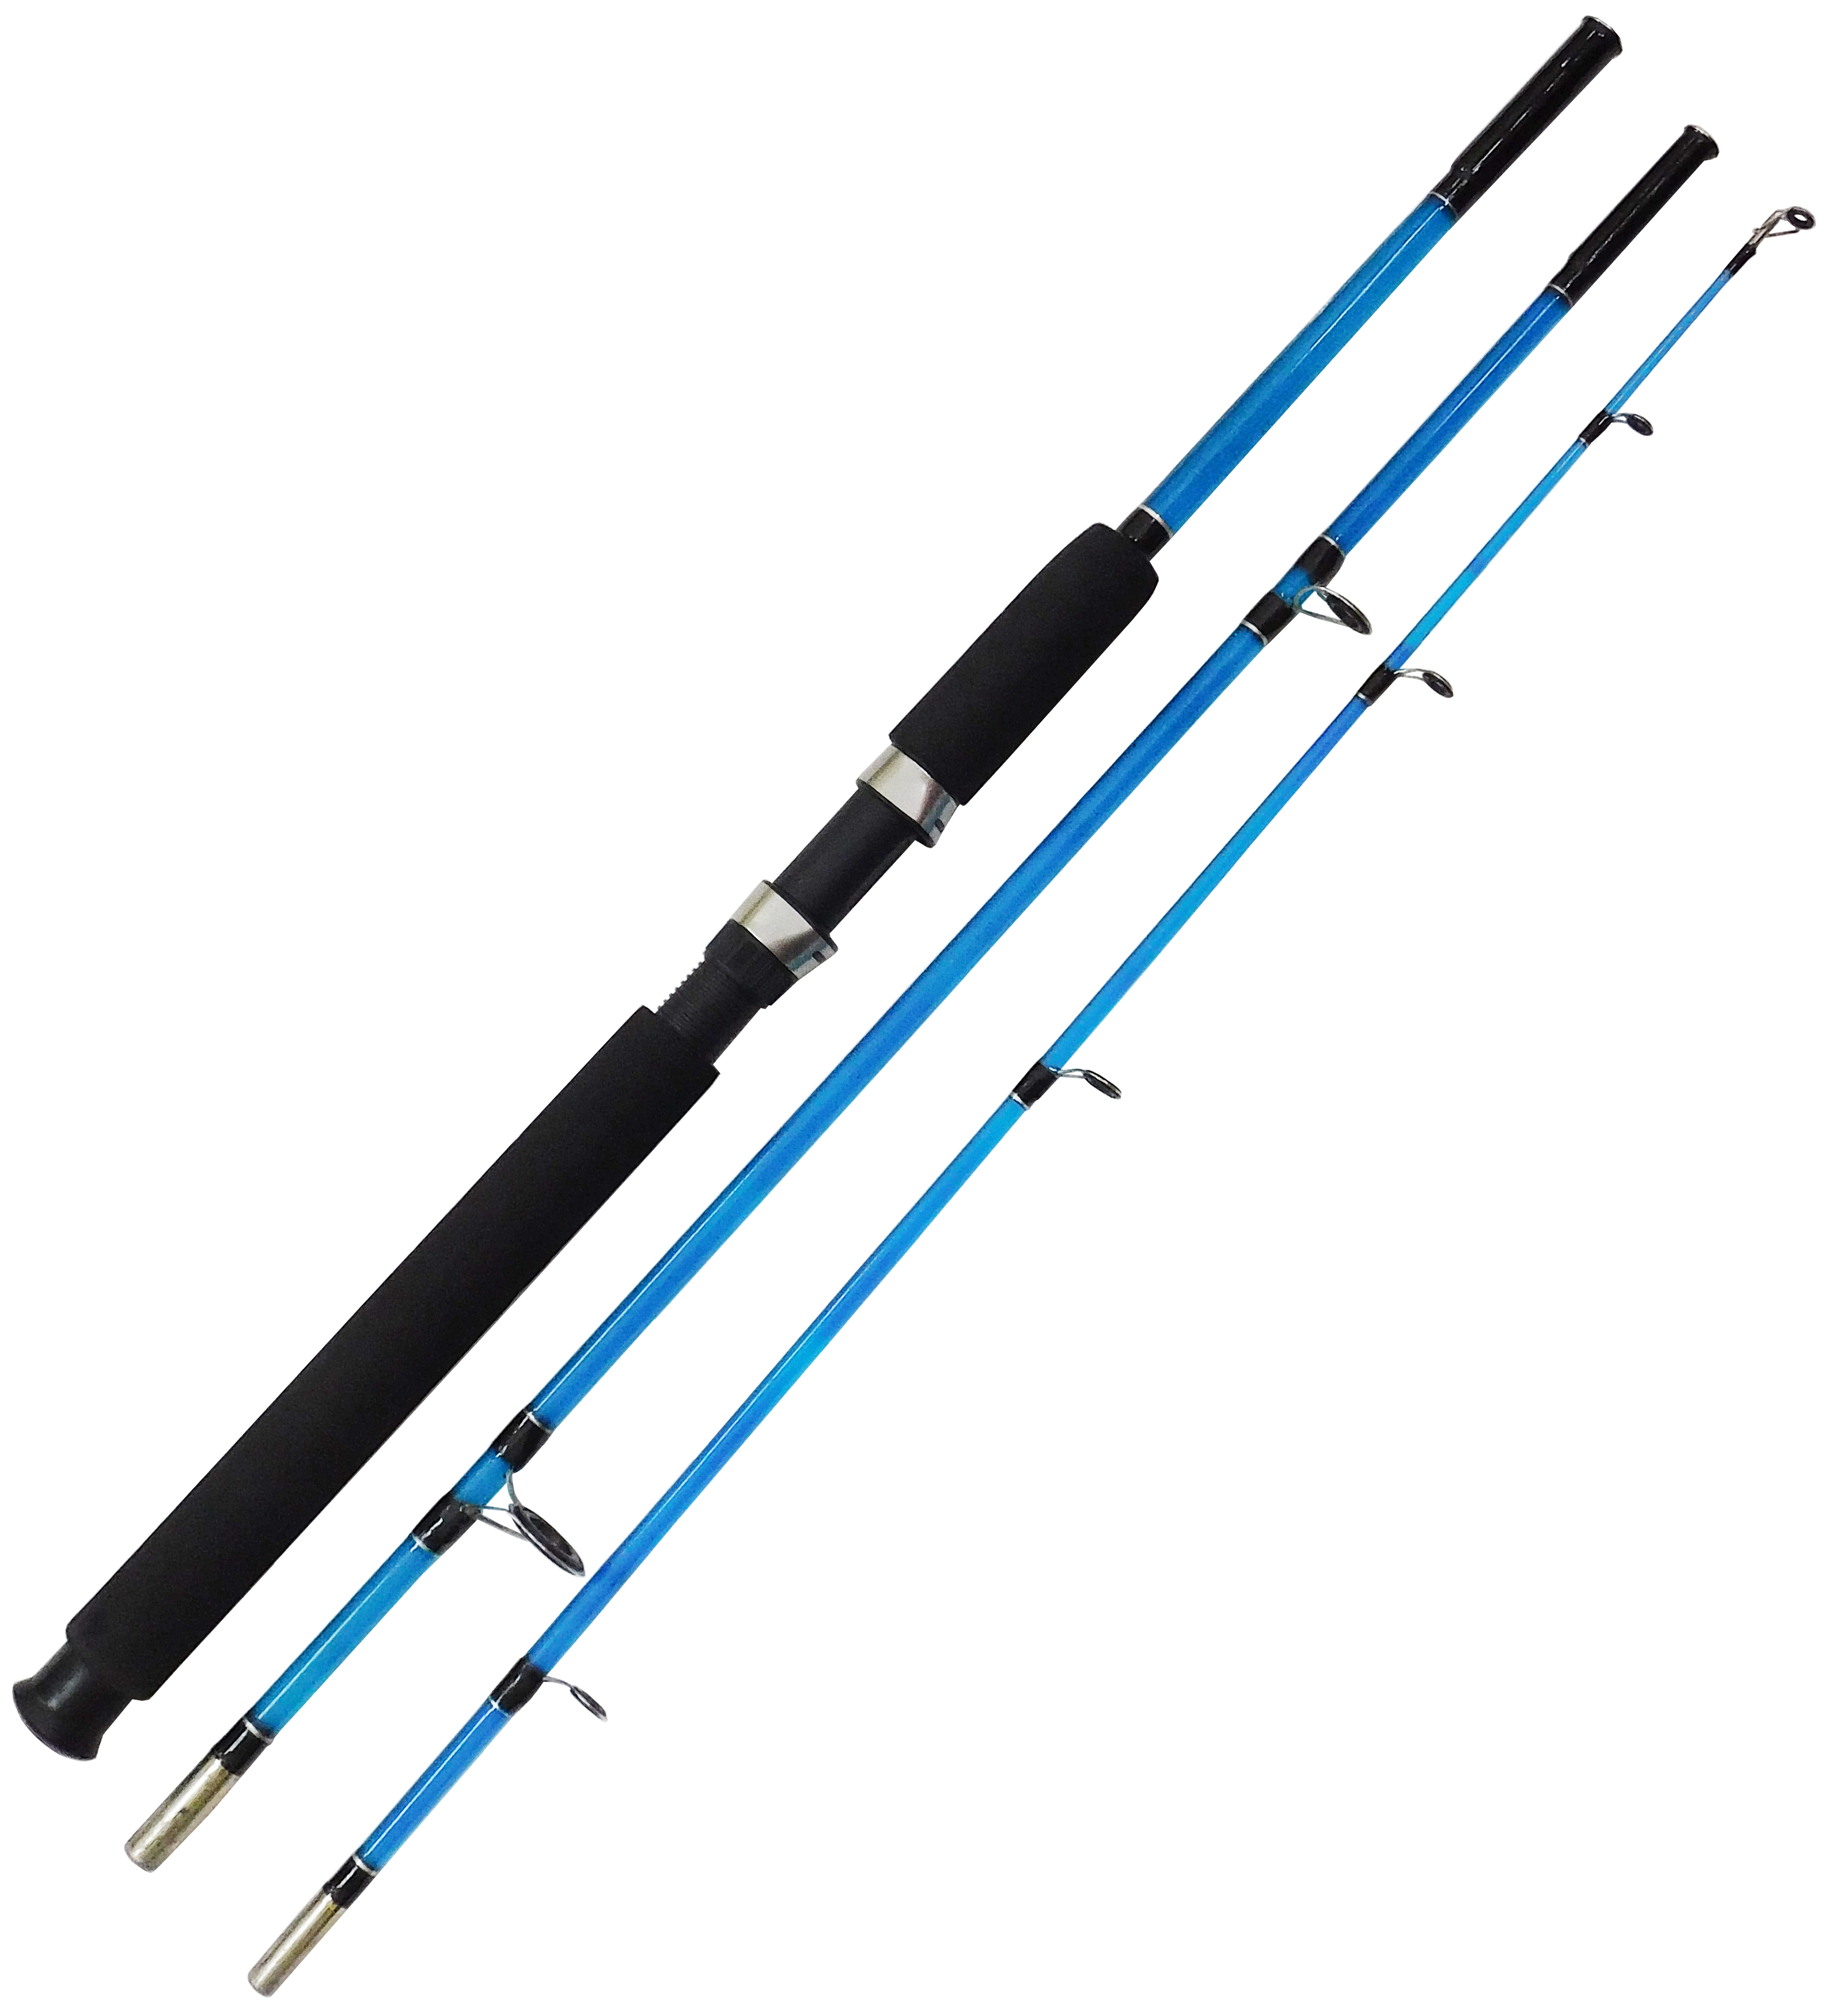 Buy Best Quality German Fiber Three Part Fishing Rod 8ft Online at